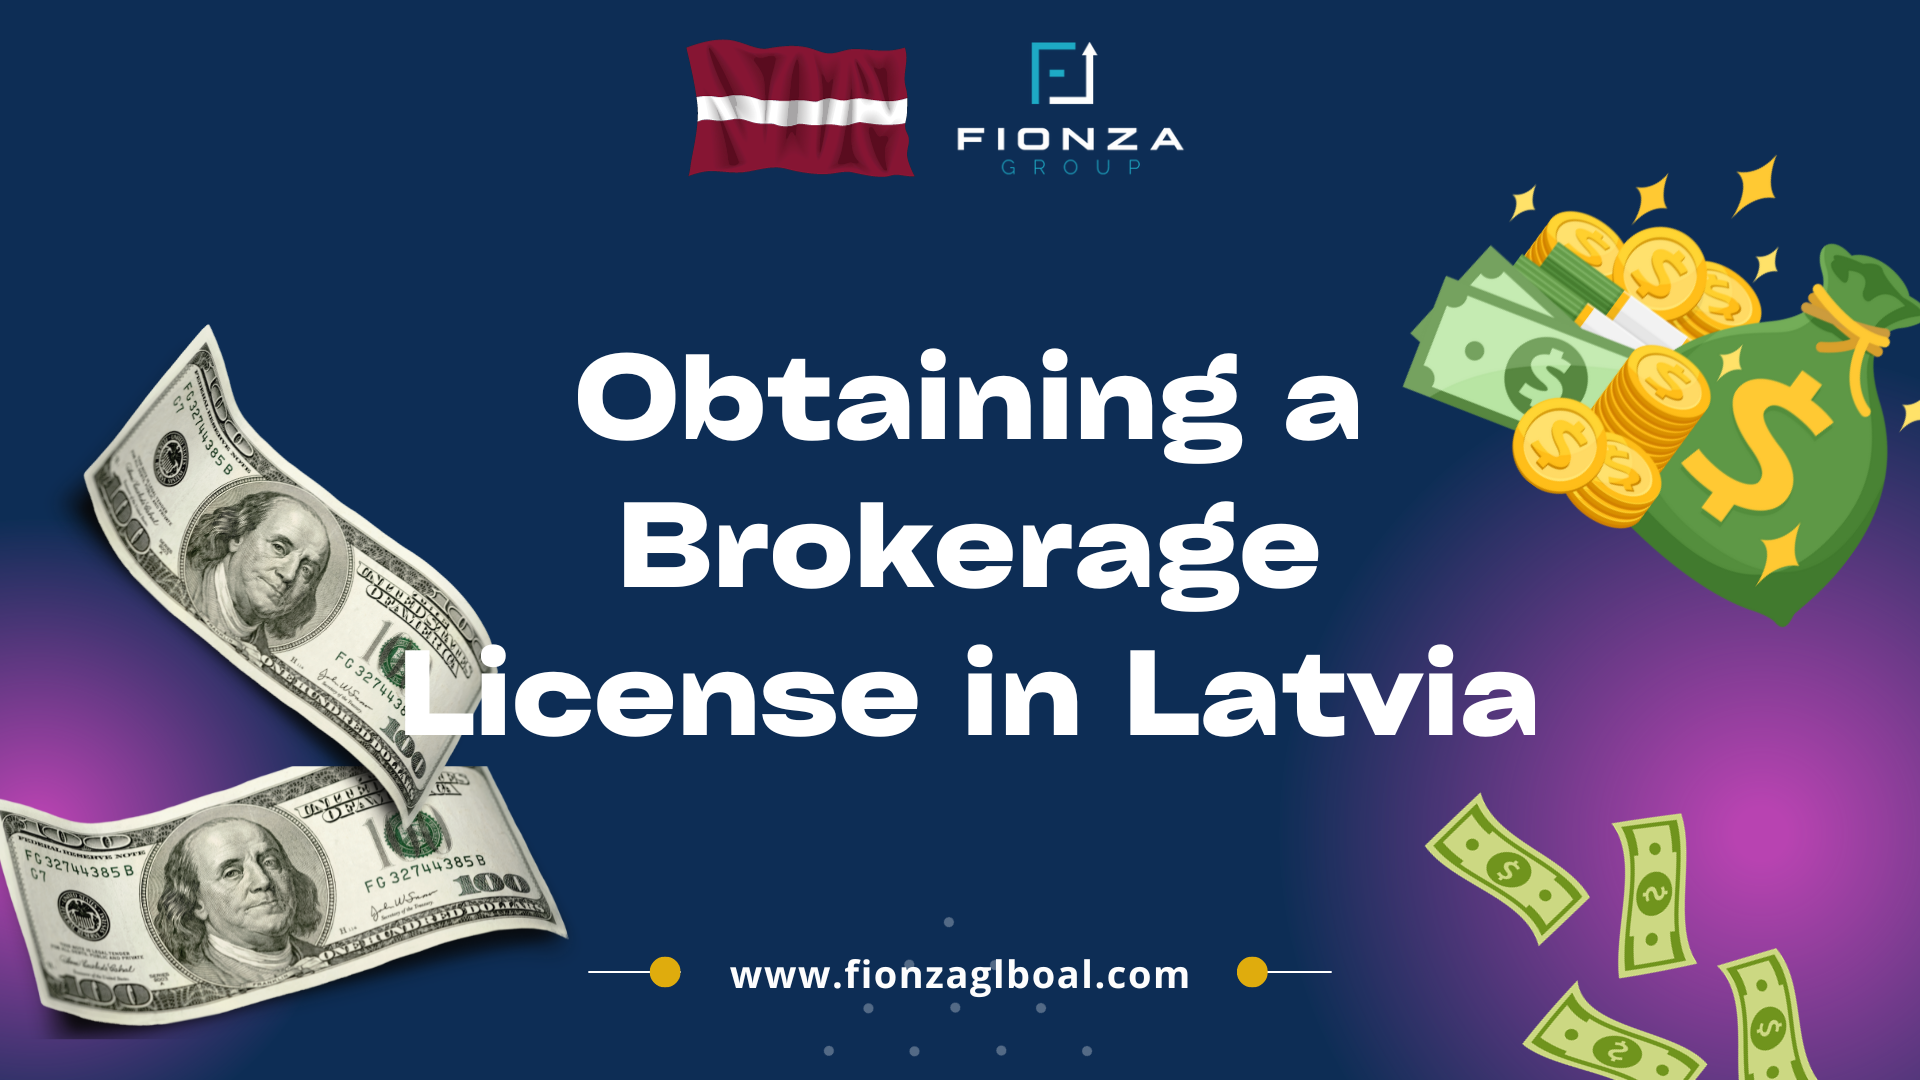 Obtaining a Brokerage License in Latvia